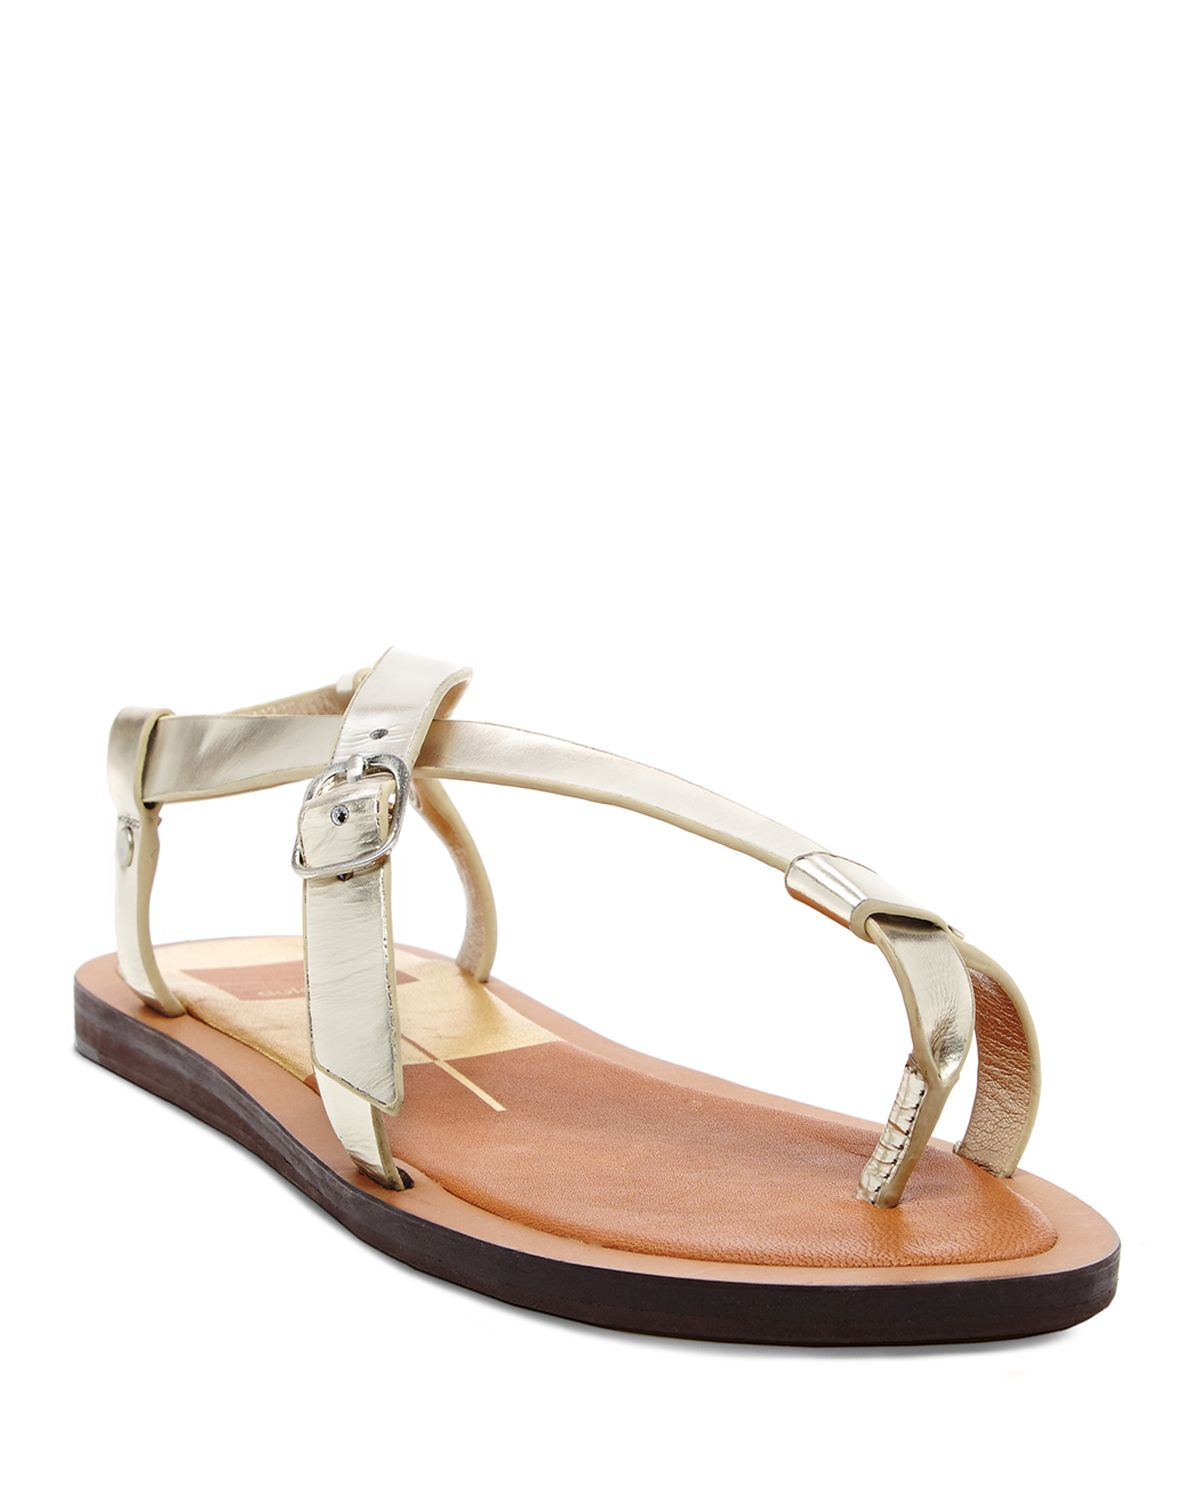 Dolce vita Flat Thong Sandals - Flurera in Gold (Light Gold)